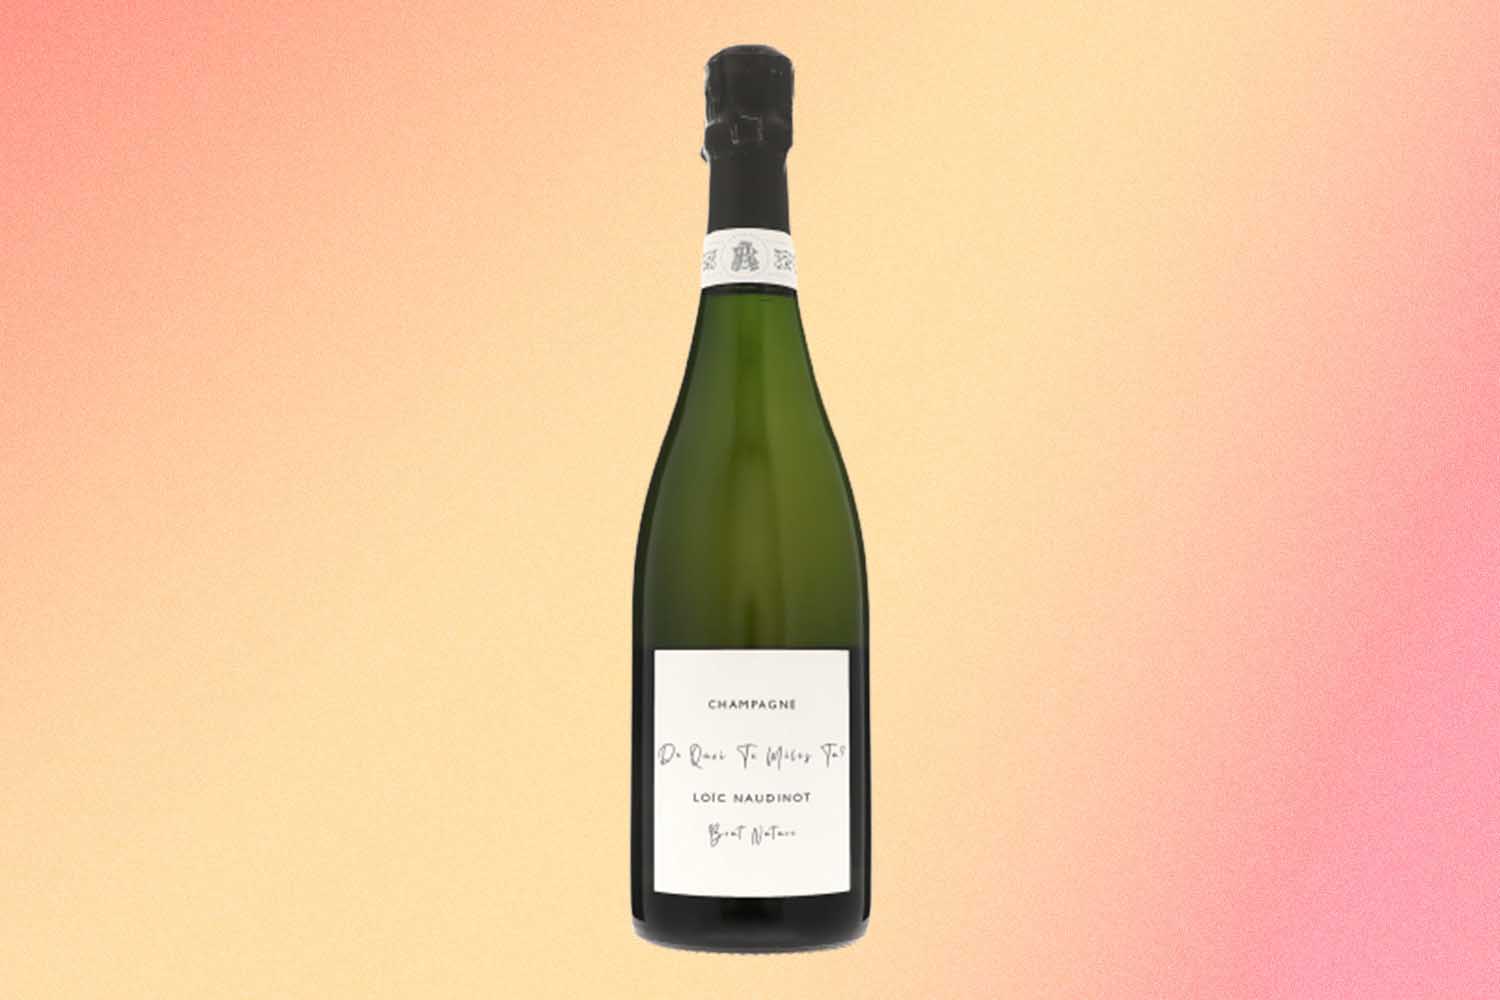 2020 Amaury Beaufort, De Qoi Te Meles Tu? Brut Nature, Champagne